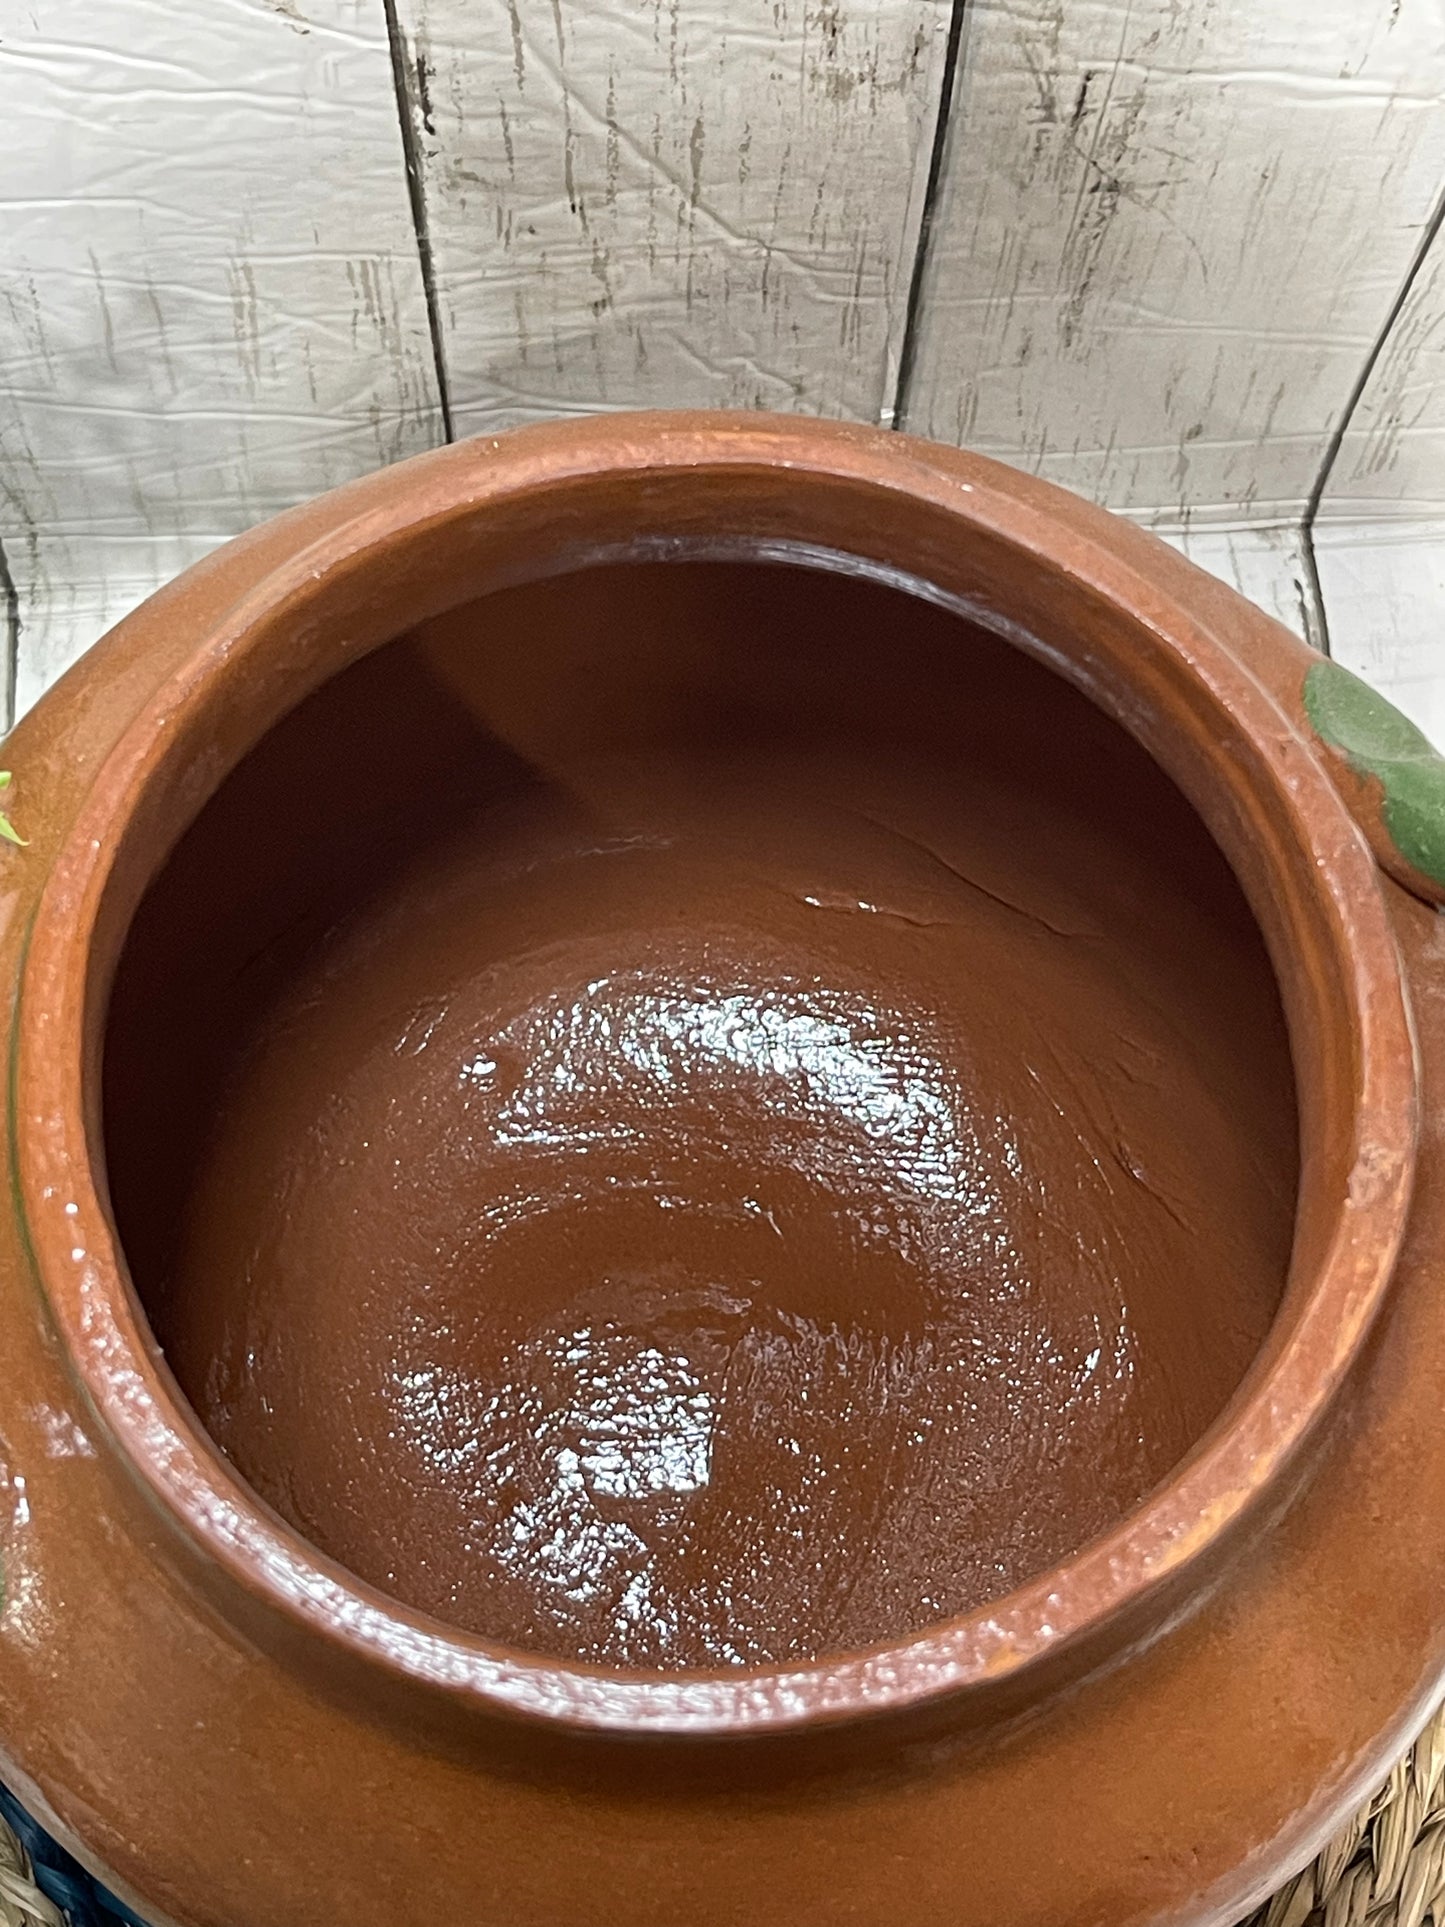 Tonala, Mexico’s handmade rustic vintage classic 8liter terracotta bean pot/olla frijolera de barro 8litros